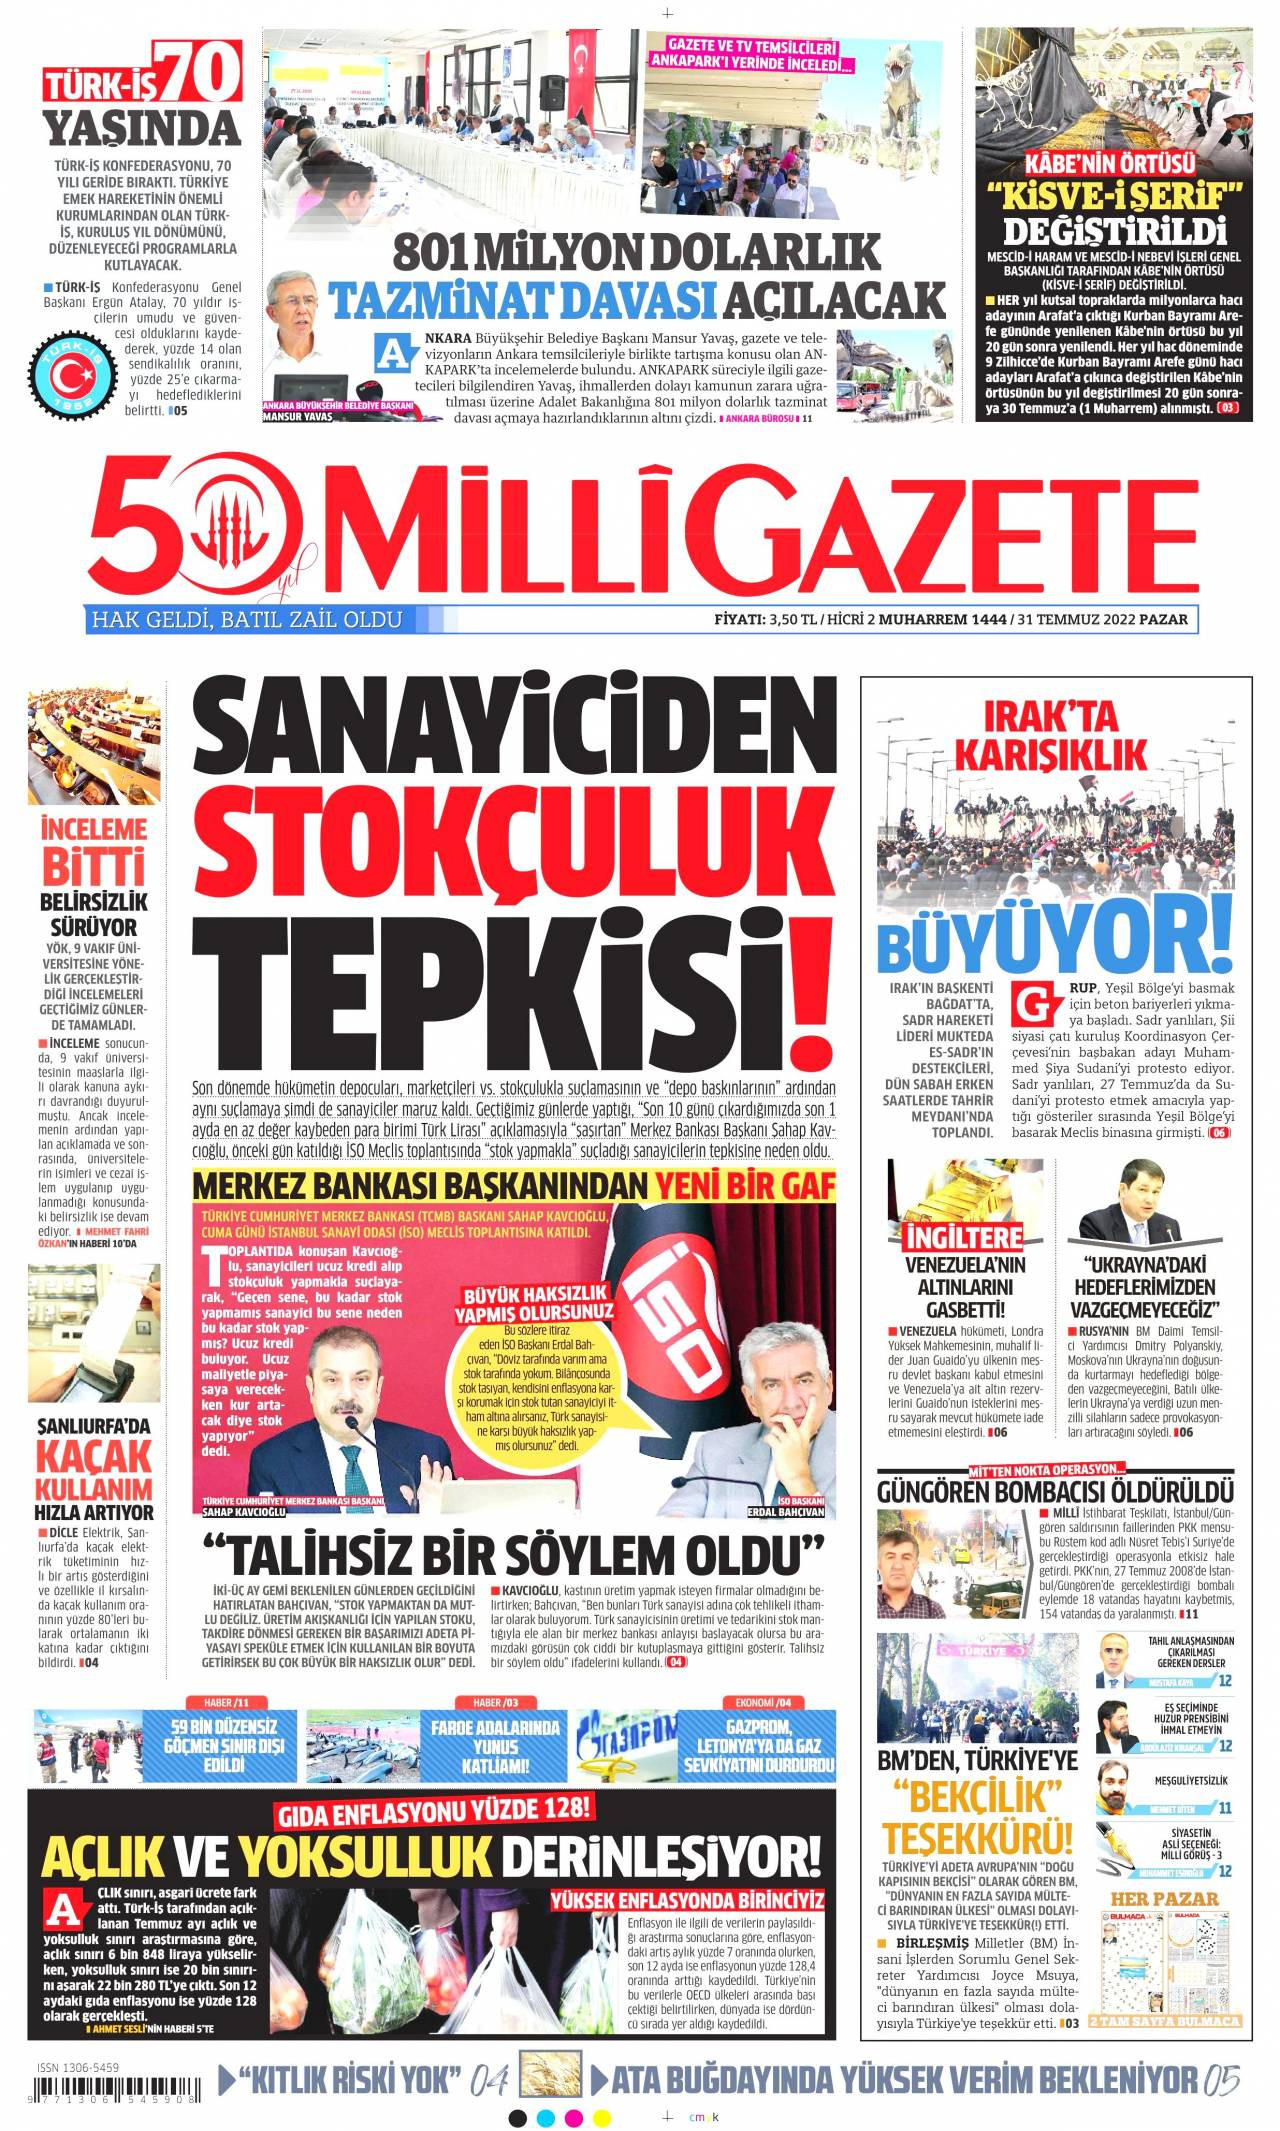 Milli Gazete 